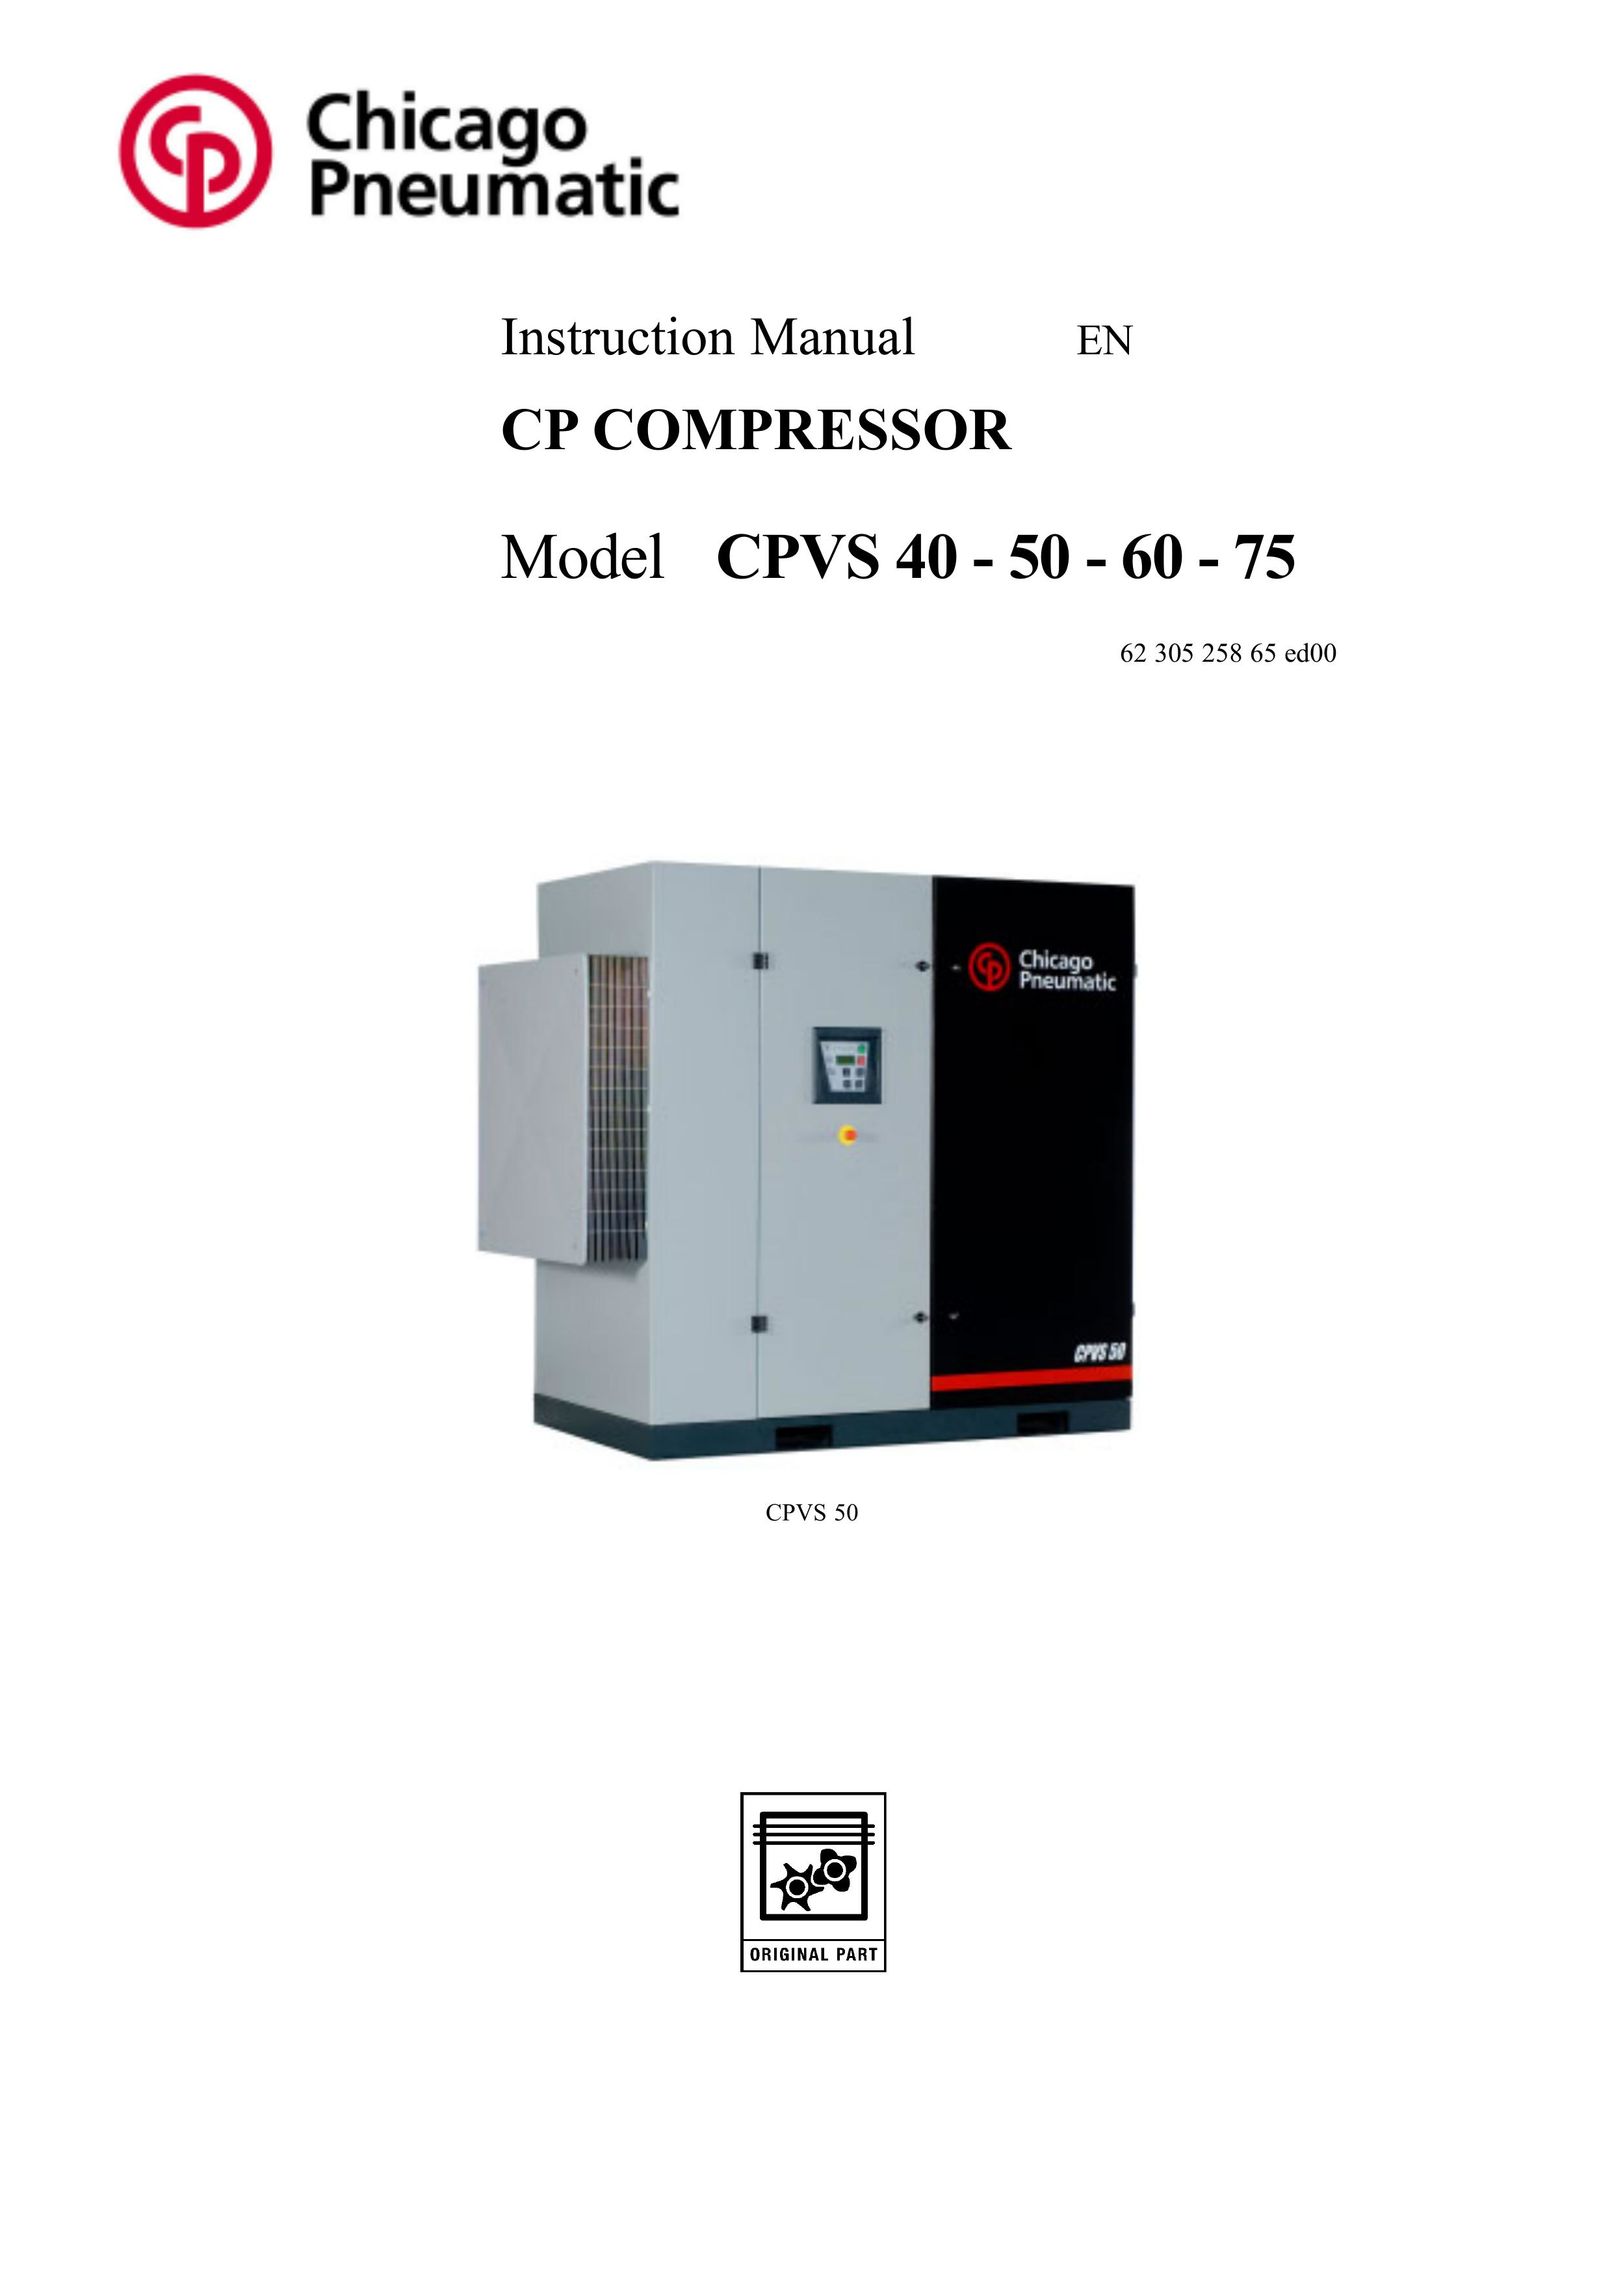 Chicago Pneumatic CPVS 40 Air Compressor User Manual